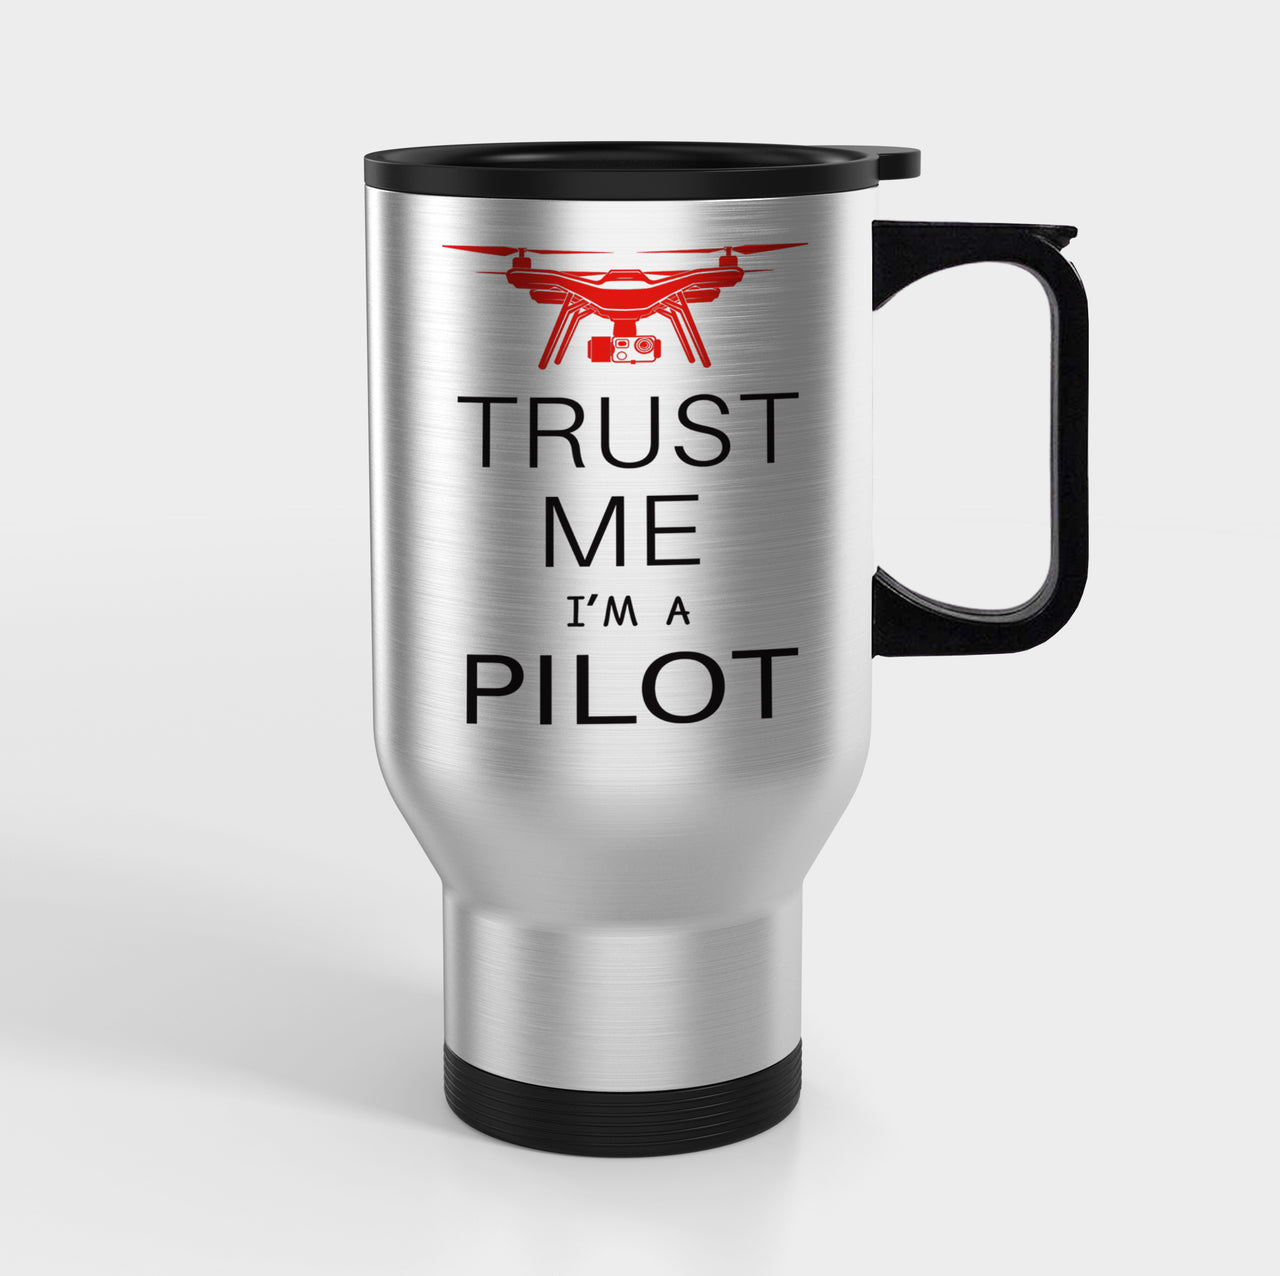 Trust Me I'm a Pilot (Drone) Designed Travel Mugs (With Holder)